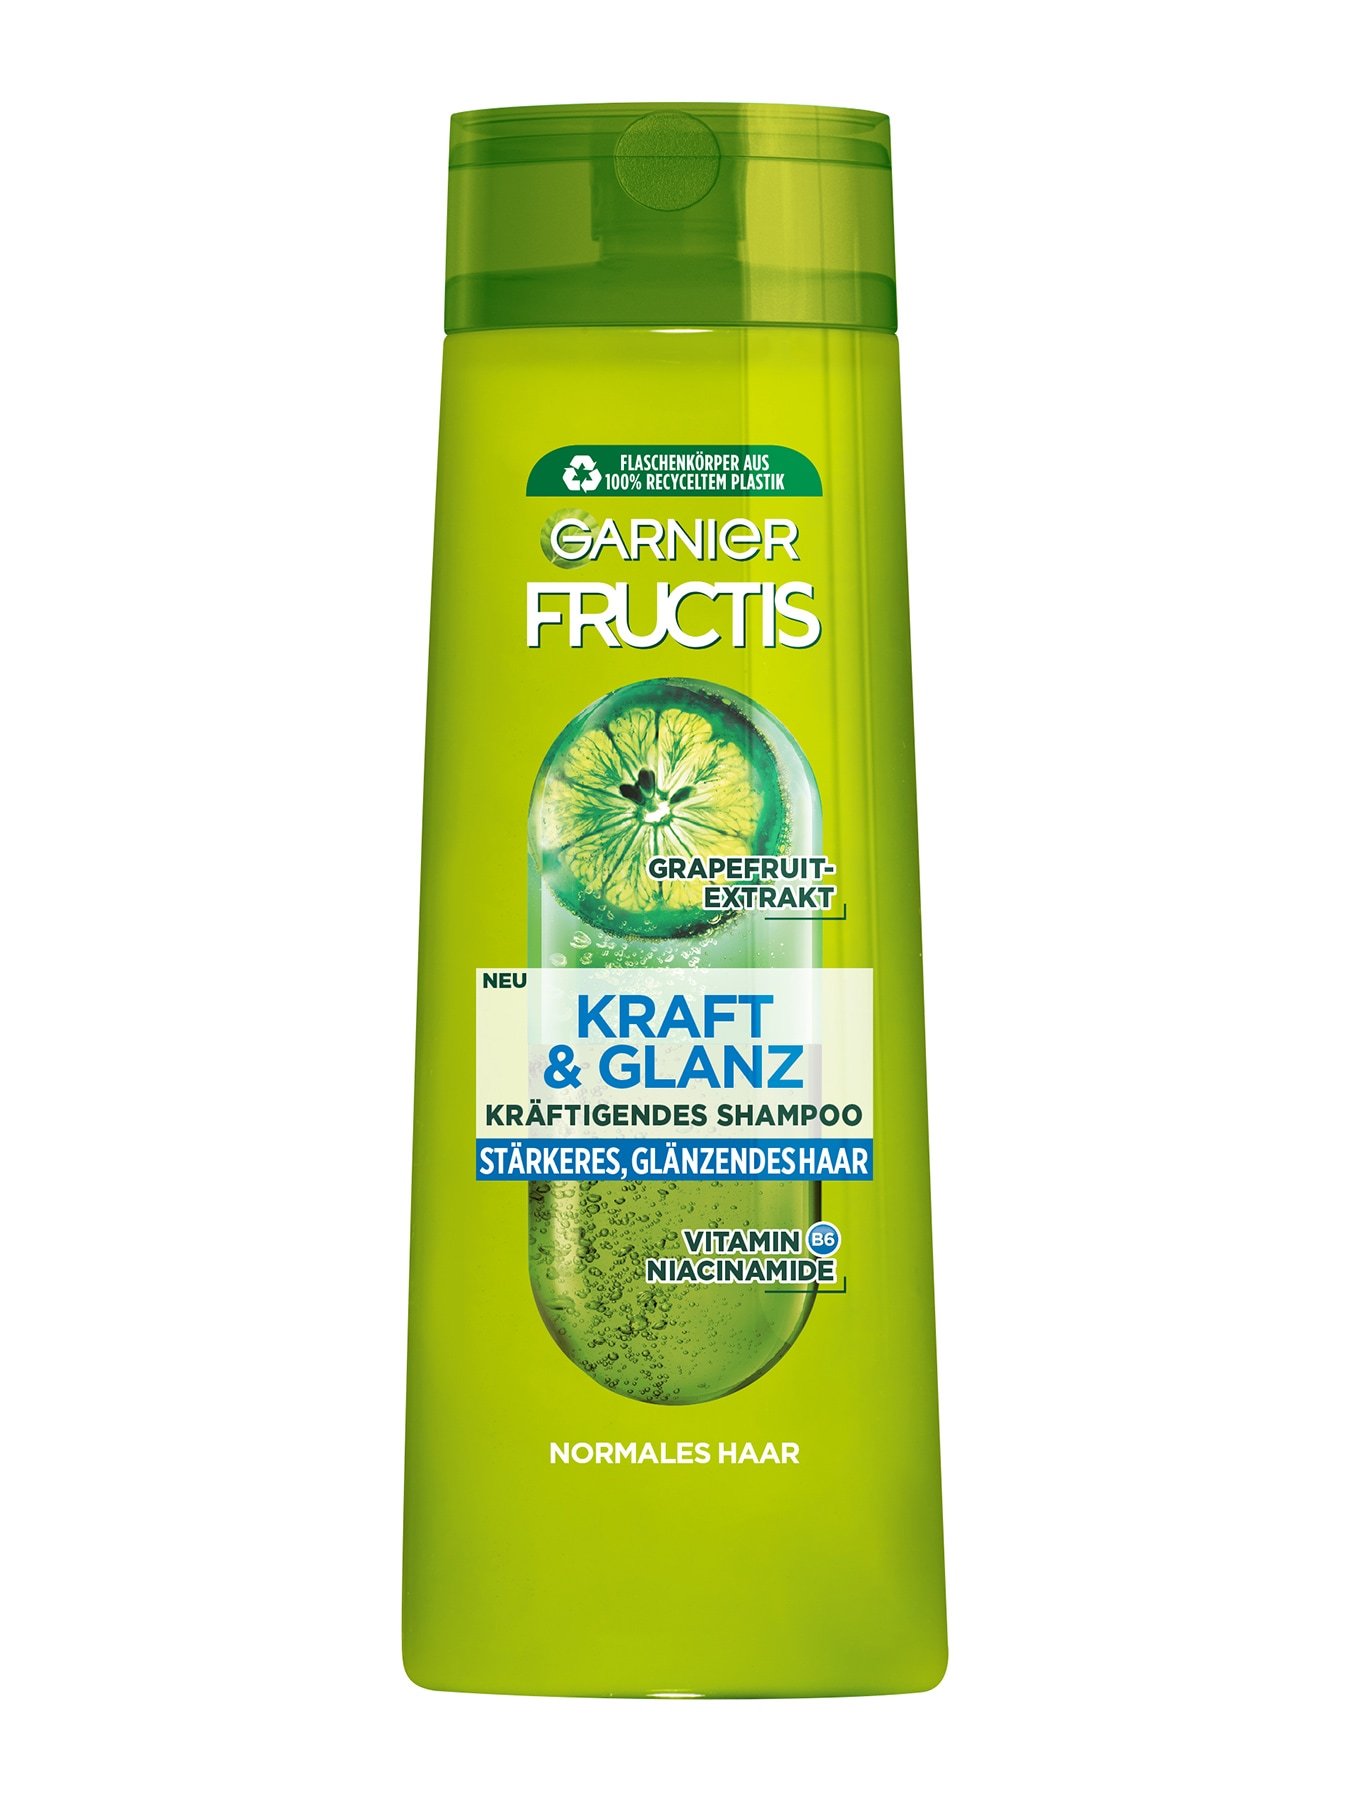 Fructis Kraft & Glanz Shampoo 300ml - Produktabbildung